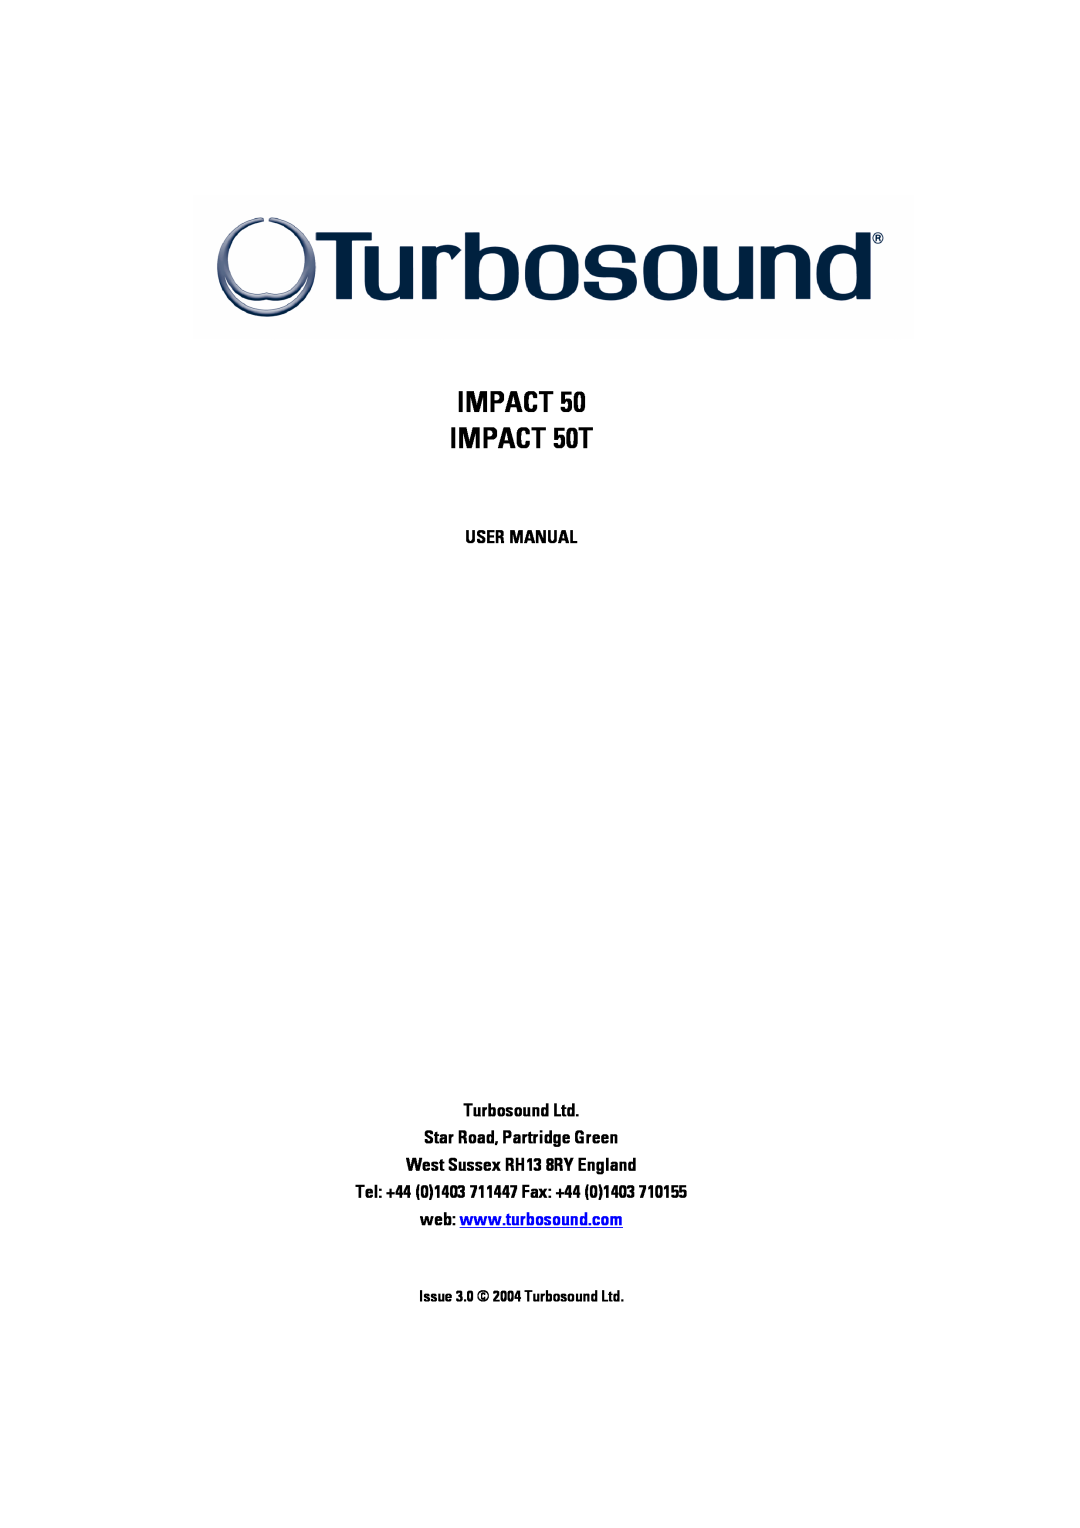 Turbosound 50 user manual Star Road, Partridge Green, West Sussex RH13 8RY England, Tel: +44 01403 711447 Fax: +44 01403 